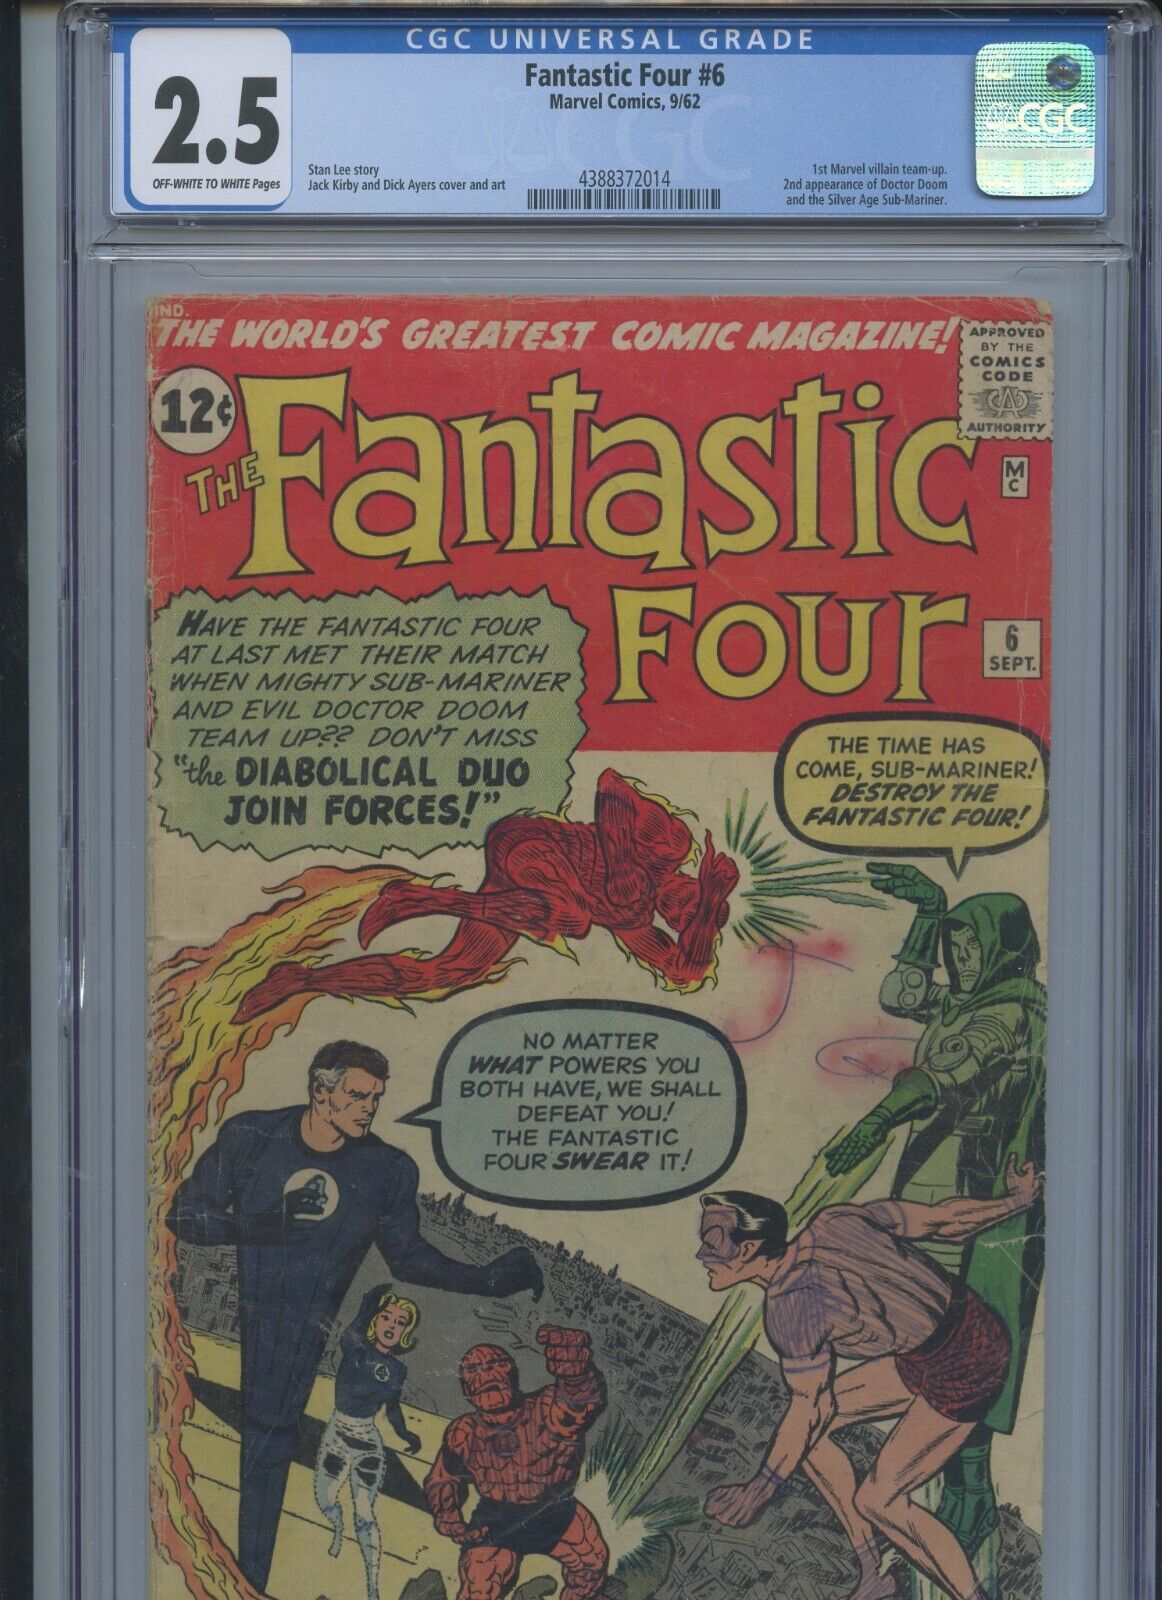 Fantastic Four #6 1962 CGC 2.5 (1st Marvel Villain TeamUp)